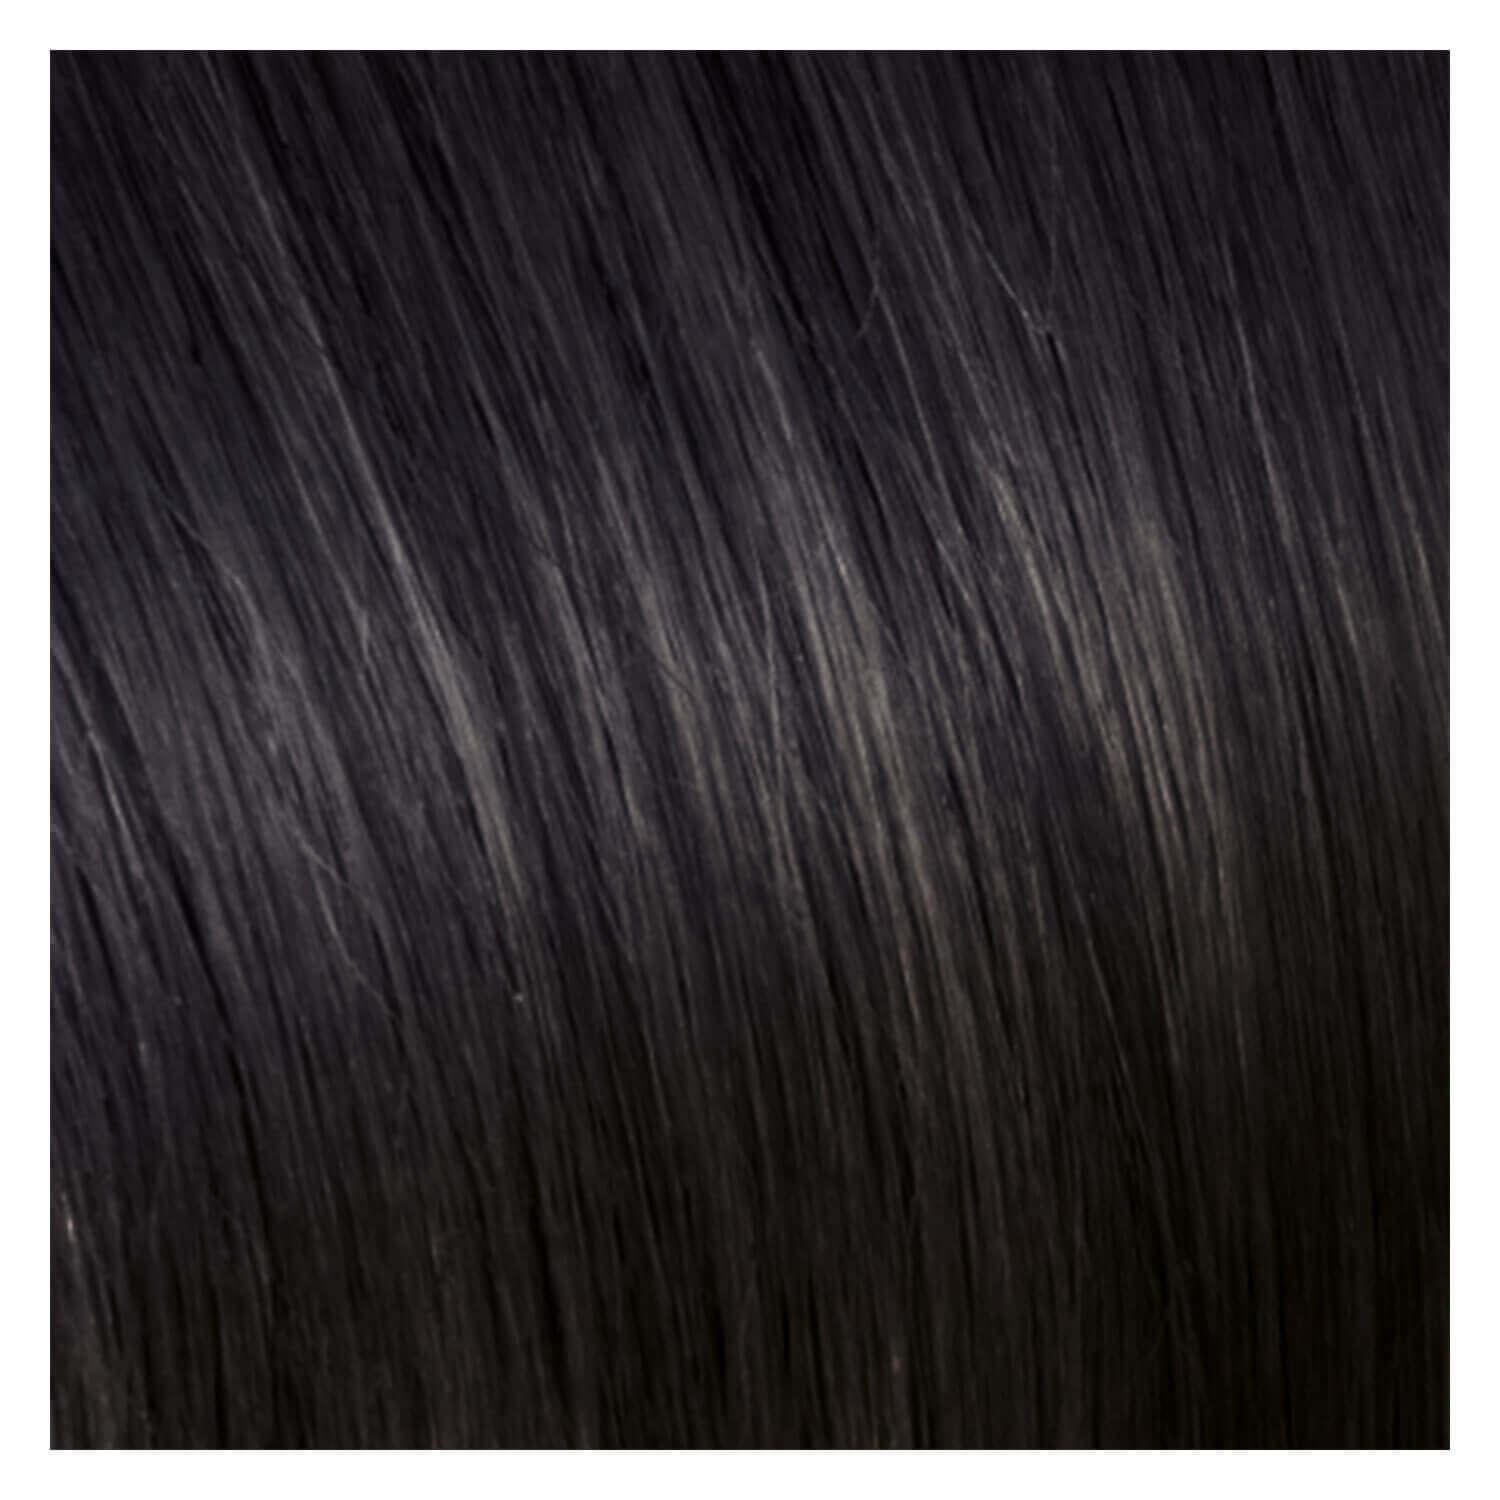 SHE Bonding-System Hair Extensions Wavy - 1B Noir 55/60cm